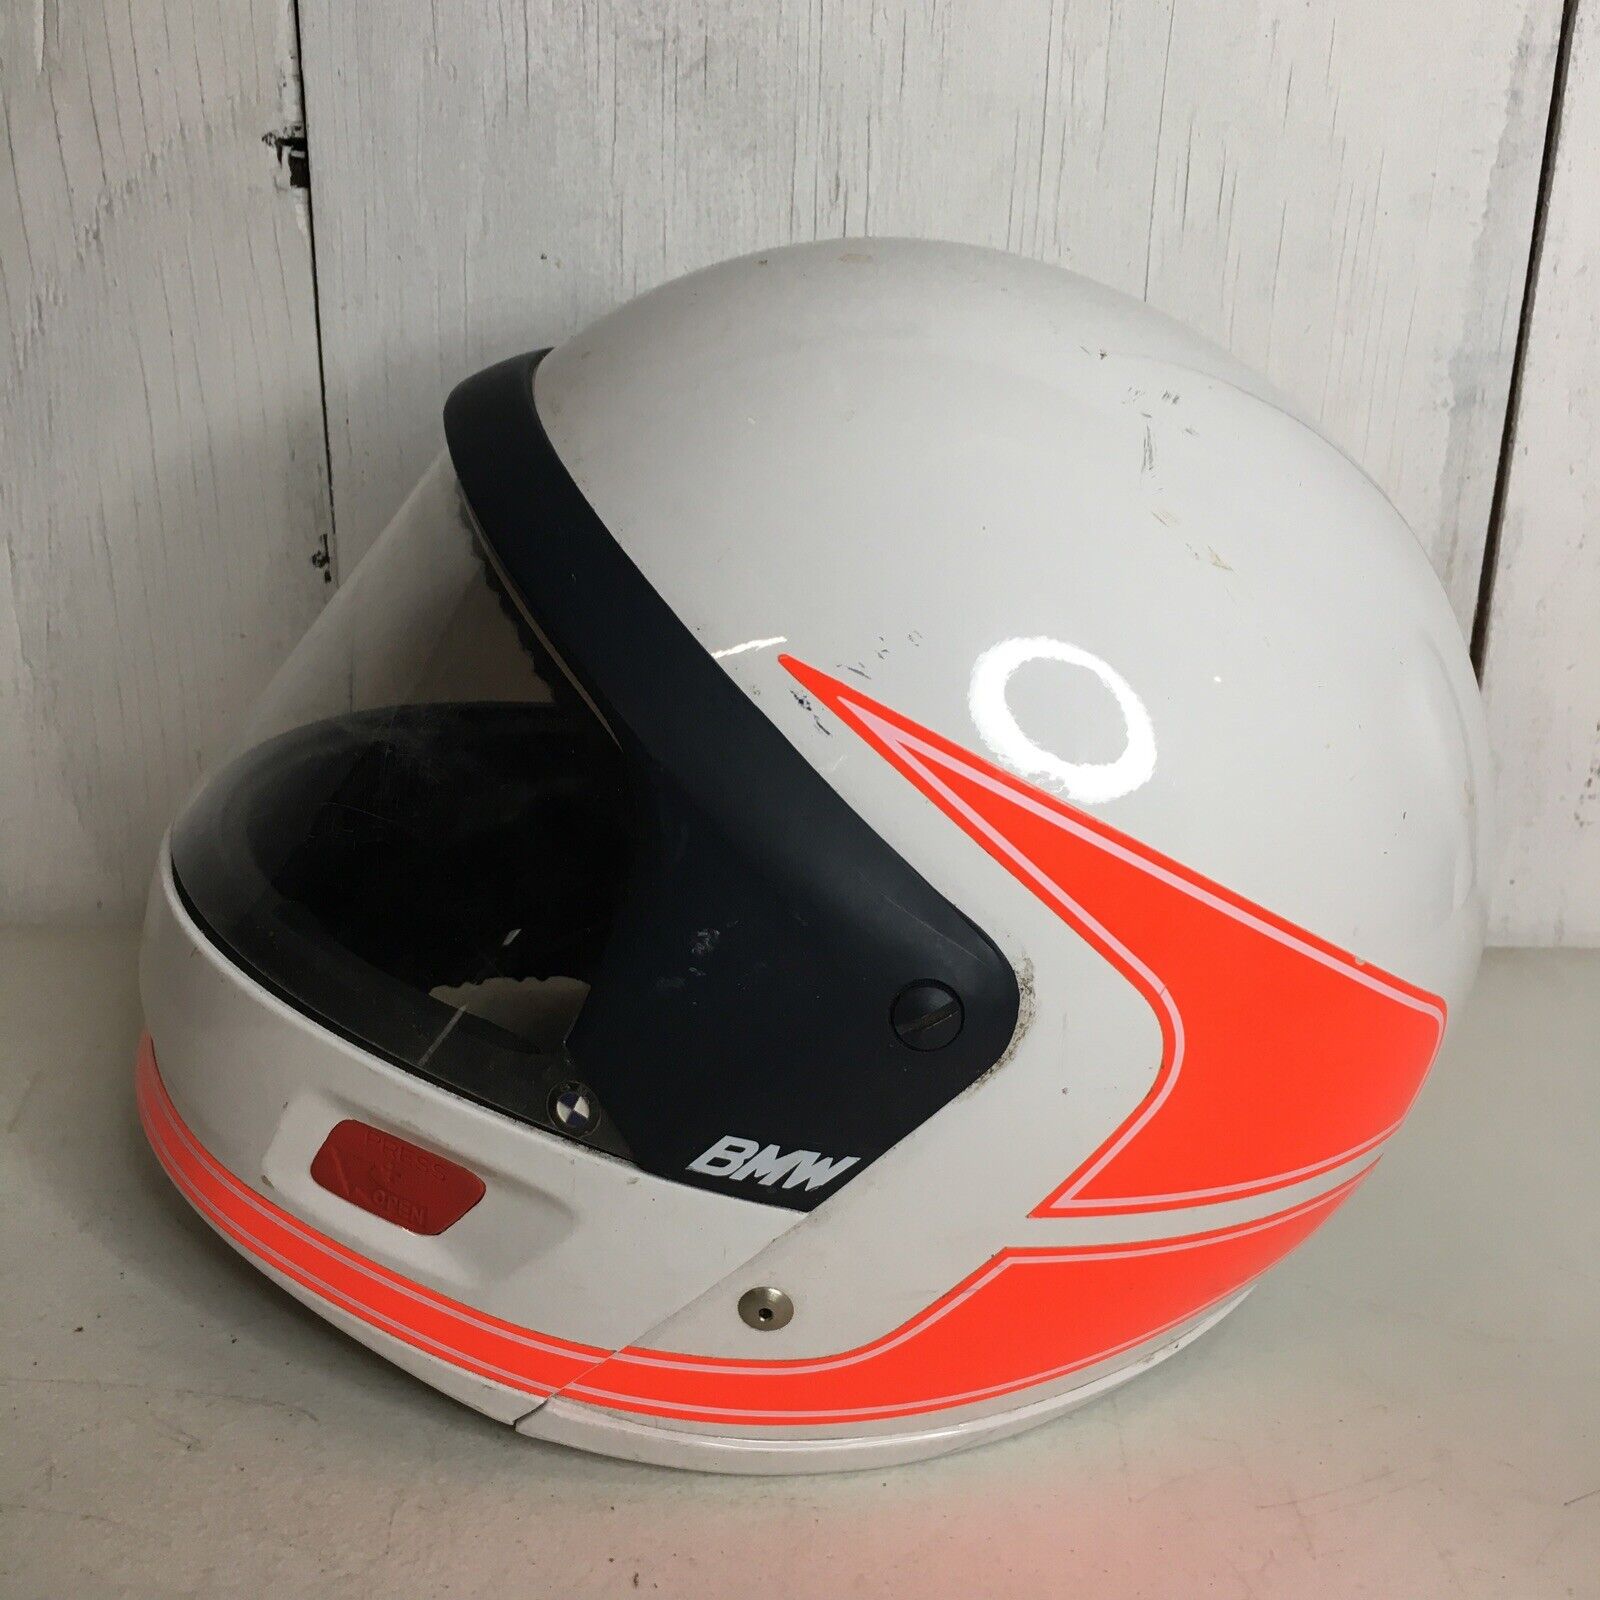 Vintage Schuberth/ BMW System, Modular Motorcycle Helmet